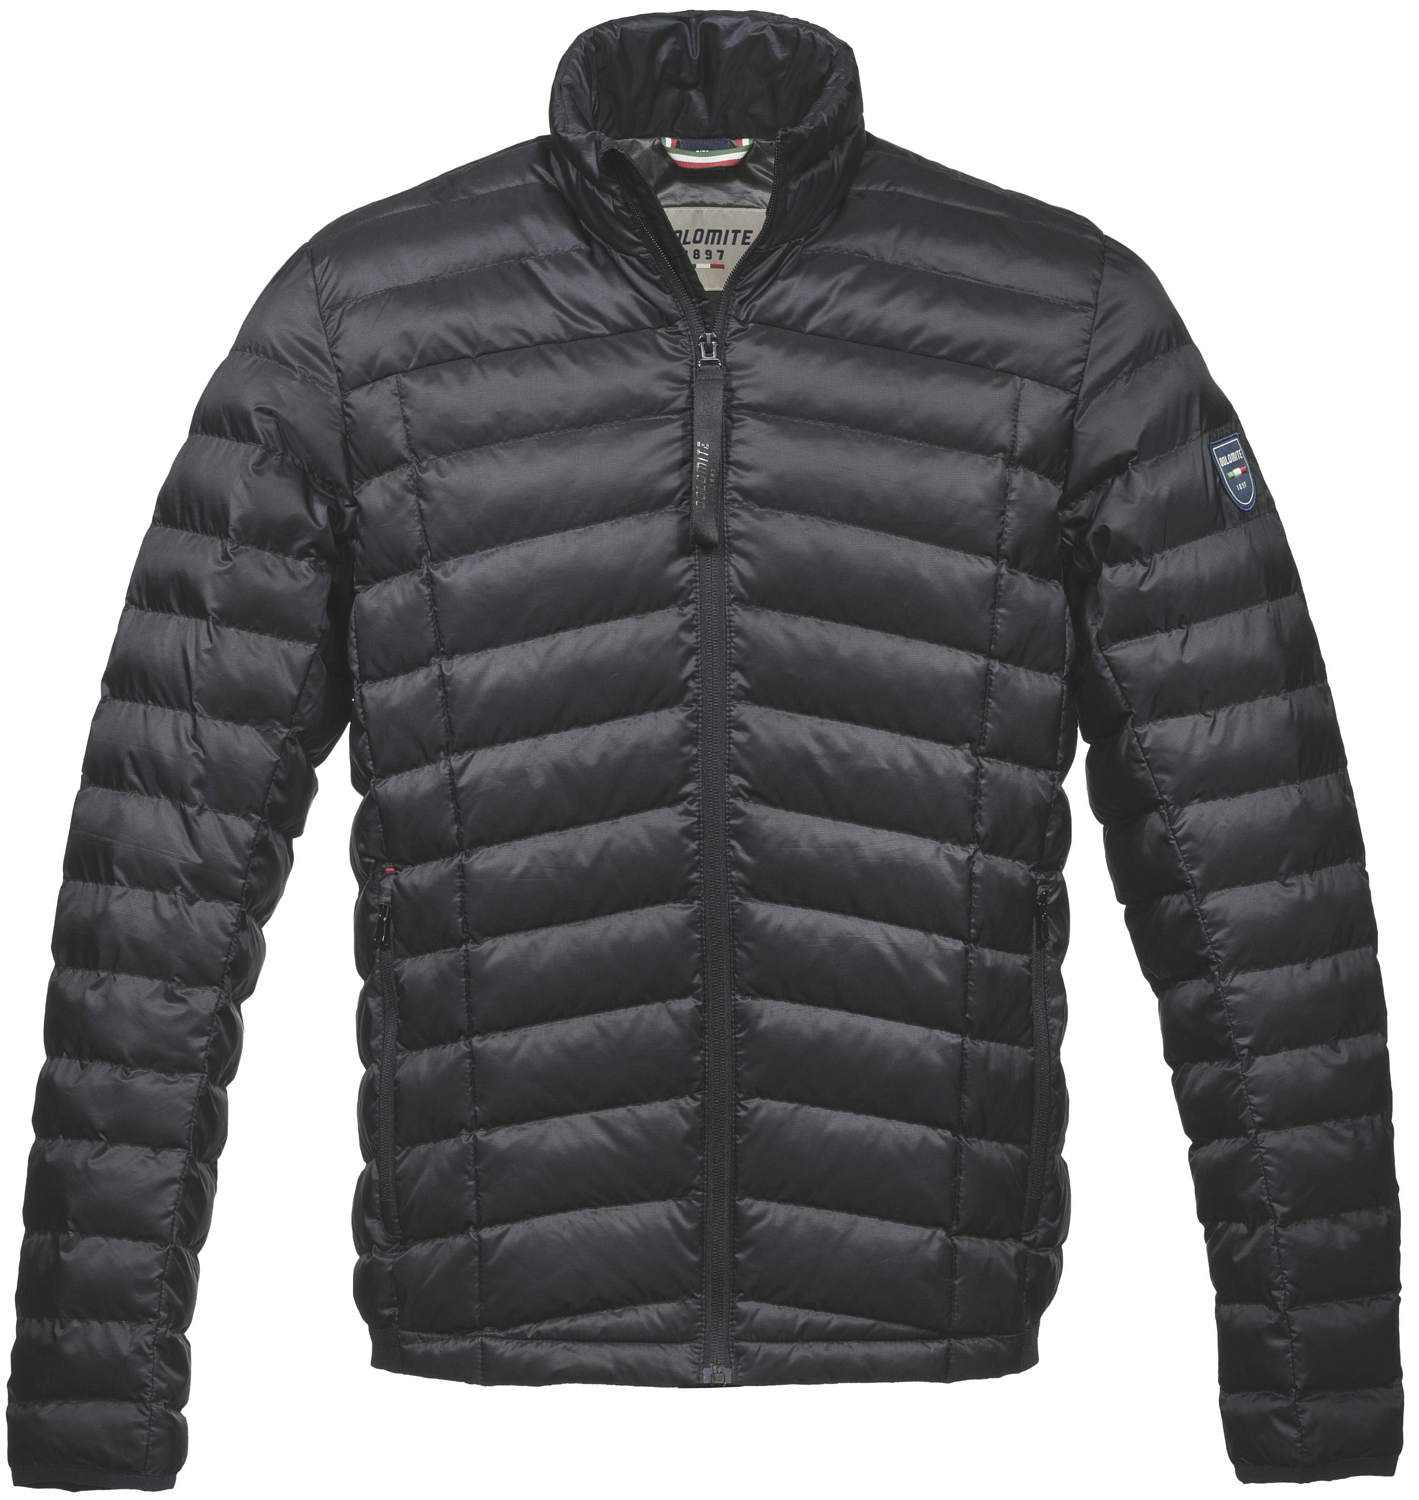 Куртка для активного отдыха Dolomite 76 Thermoplume Evo 1 Jacket M's Black